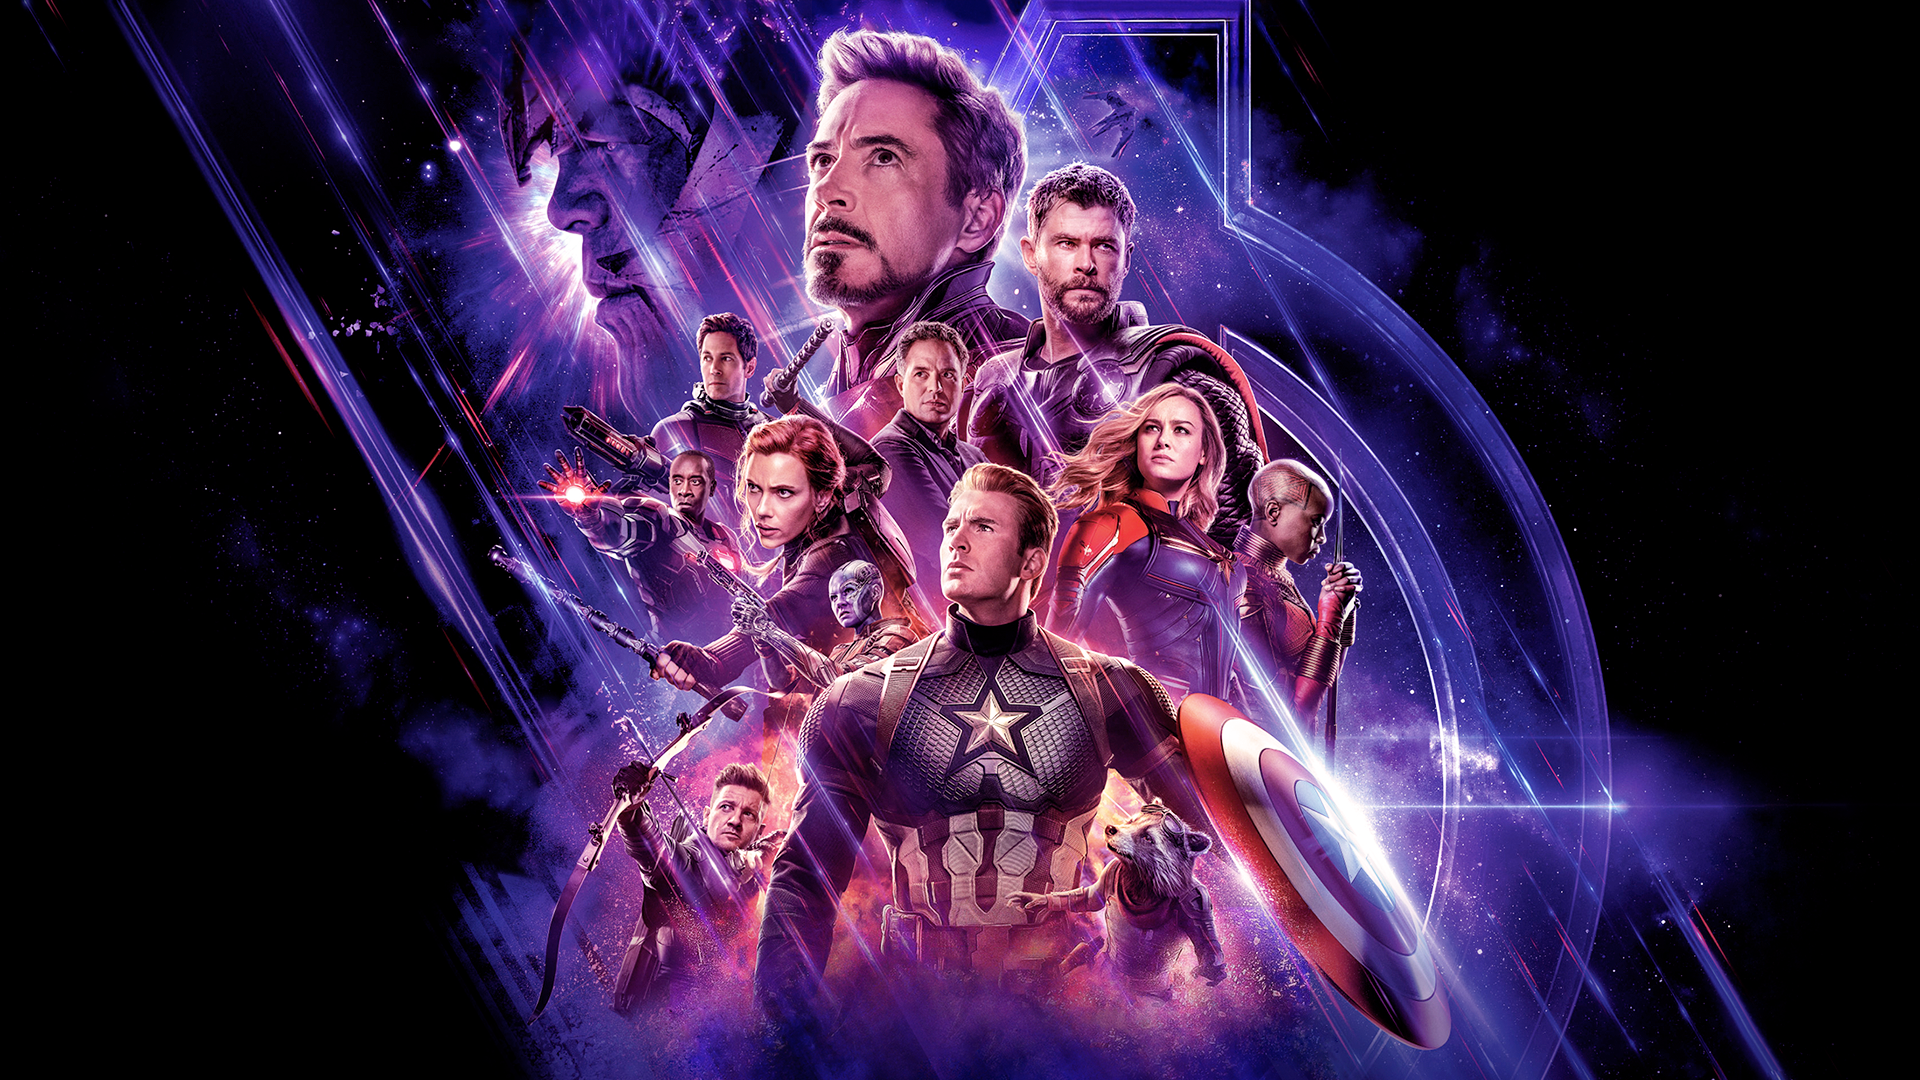 Avengers: Endgame Wallpaper - Free Download by 3xWellKO on DeviantArt